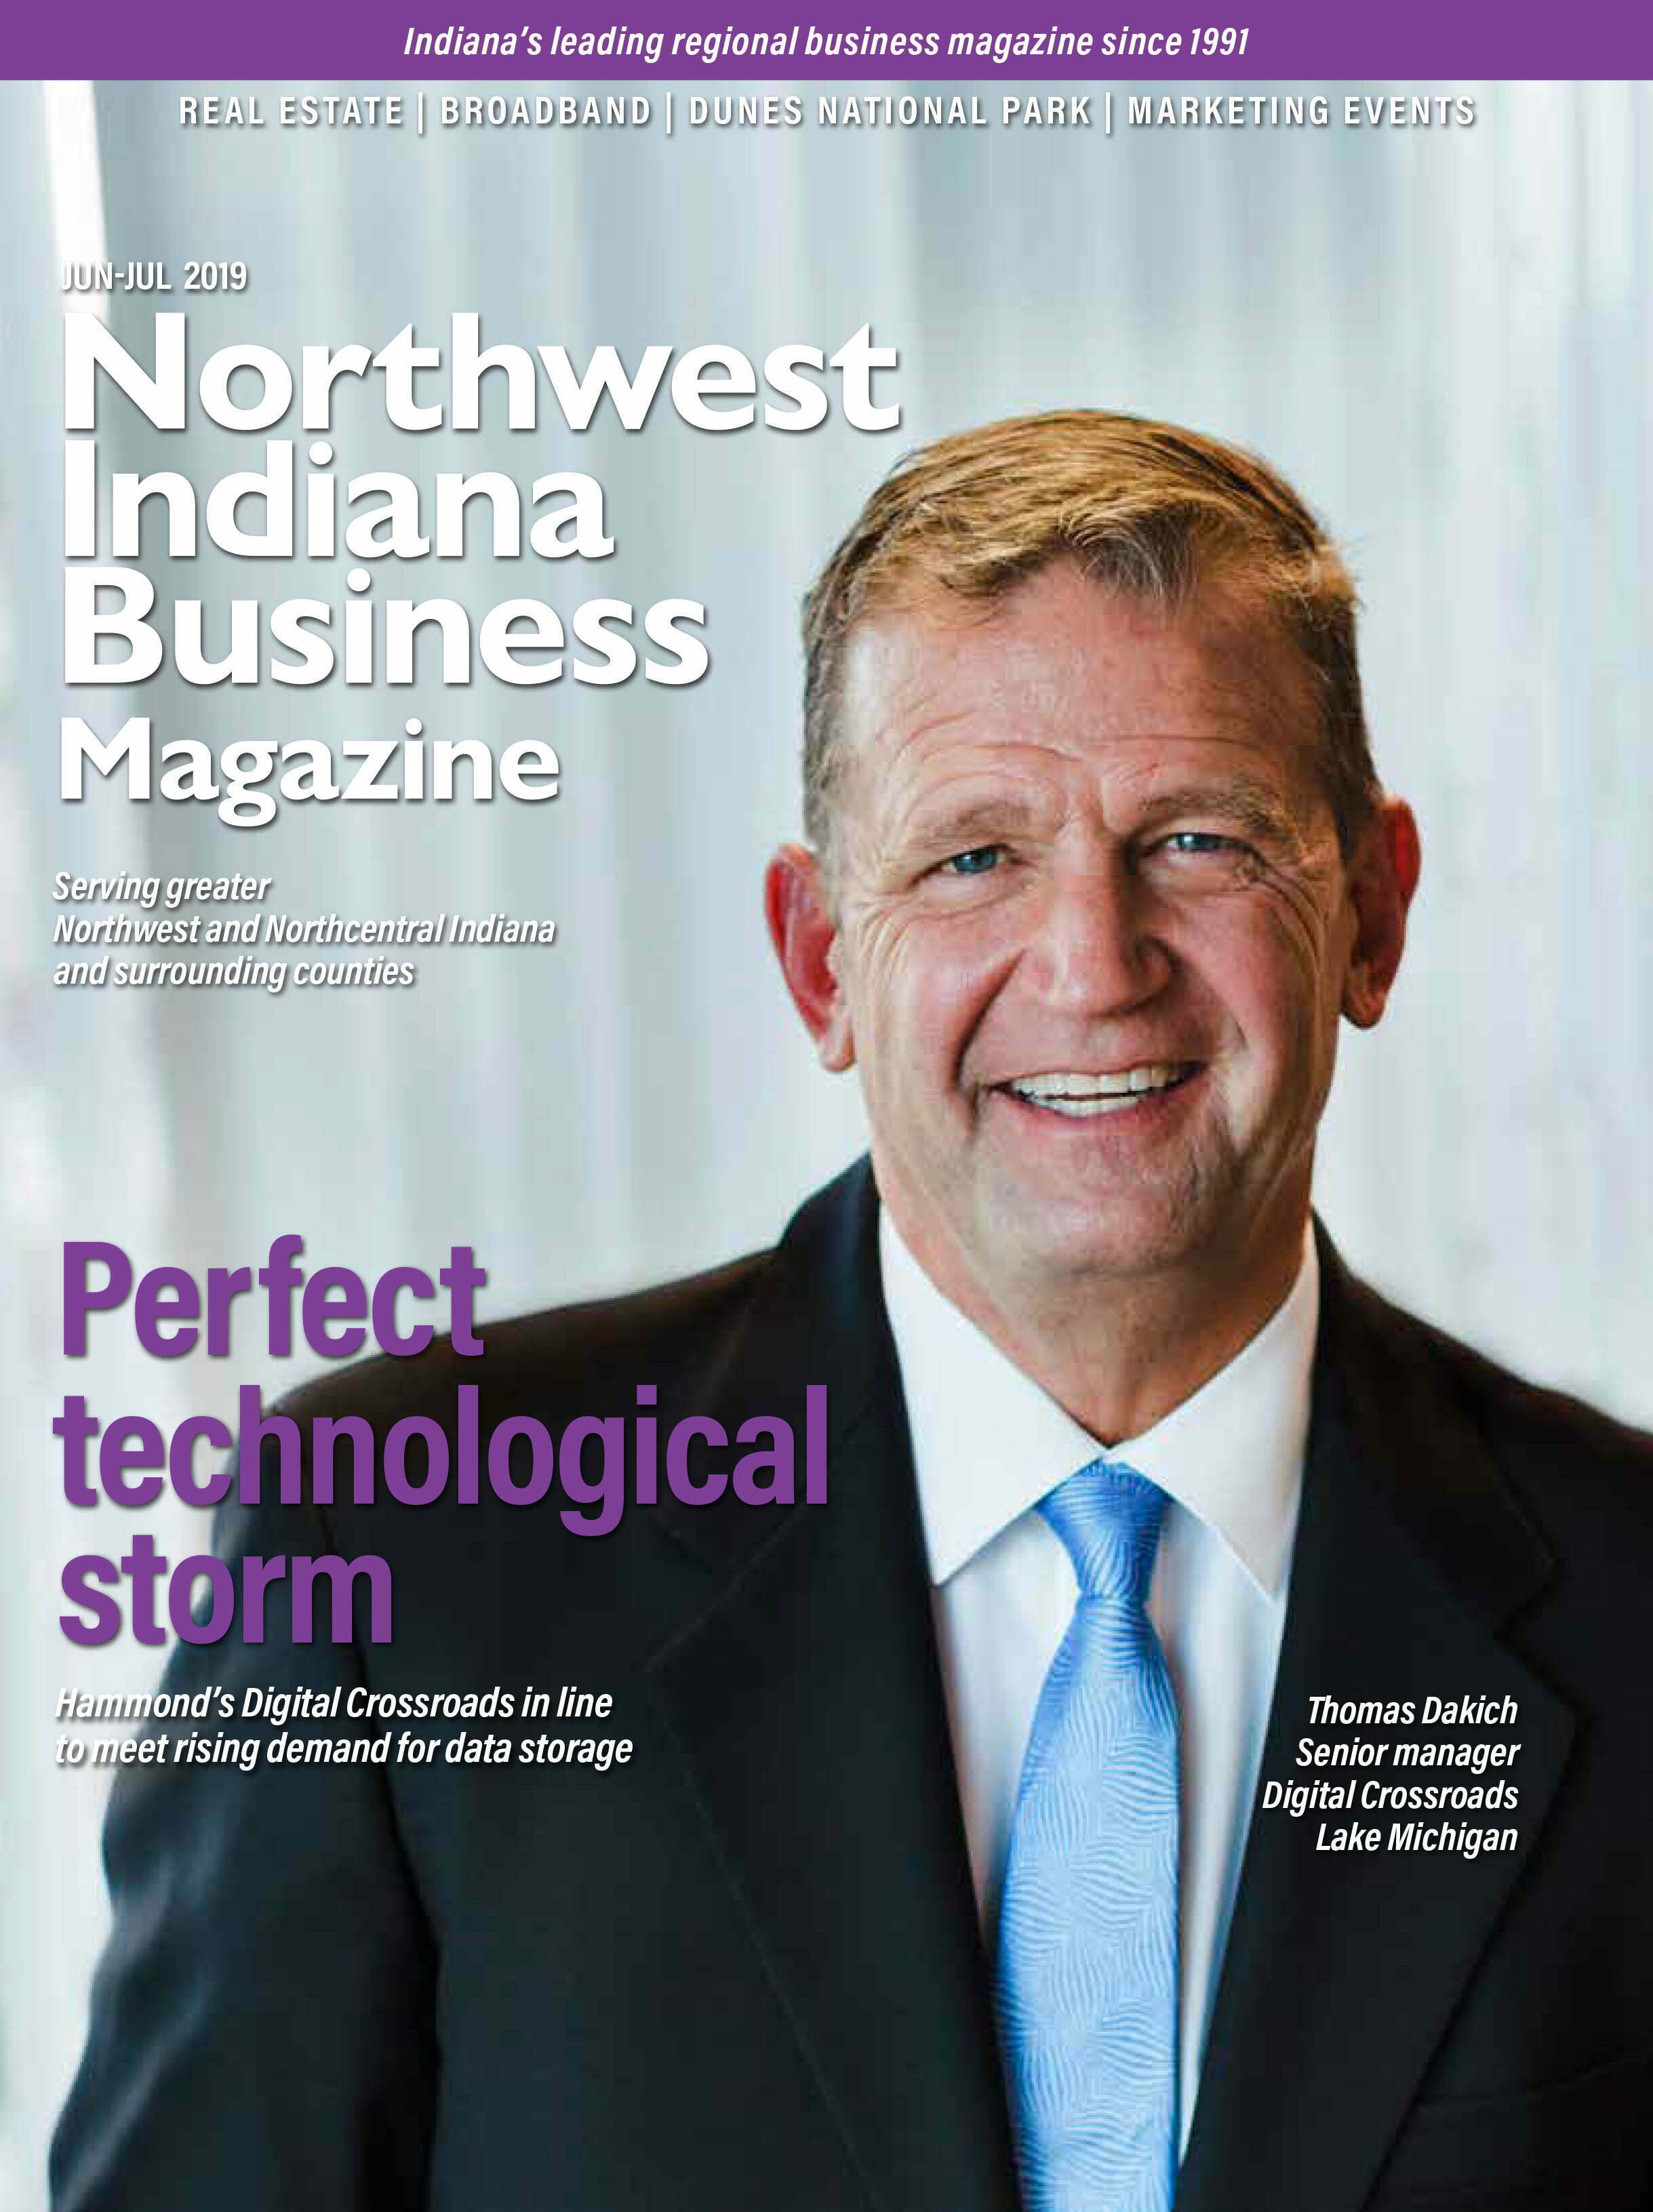 Northwest Indiana Business Magazine Jun-Jul 2019 issue